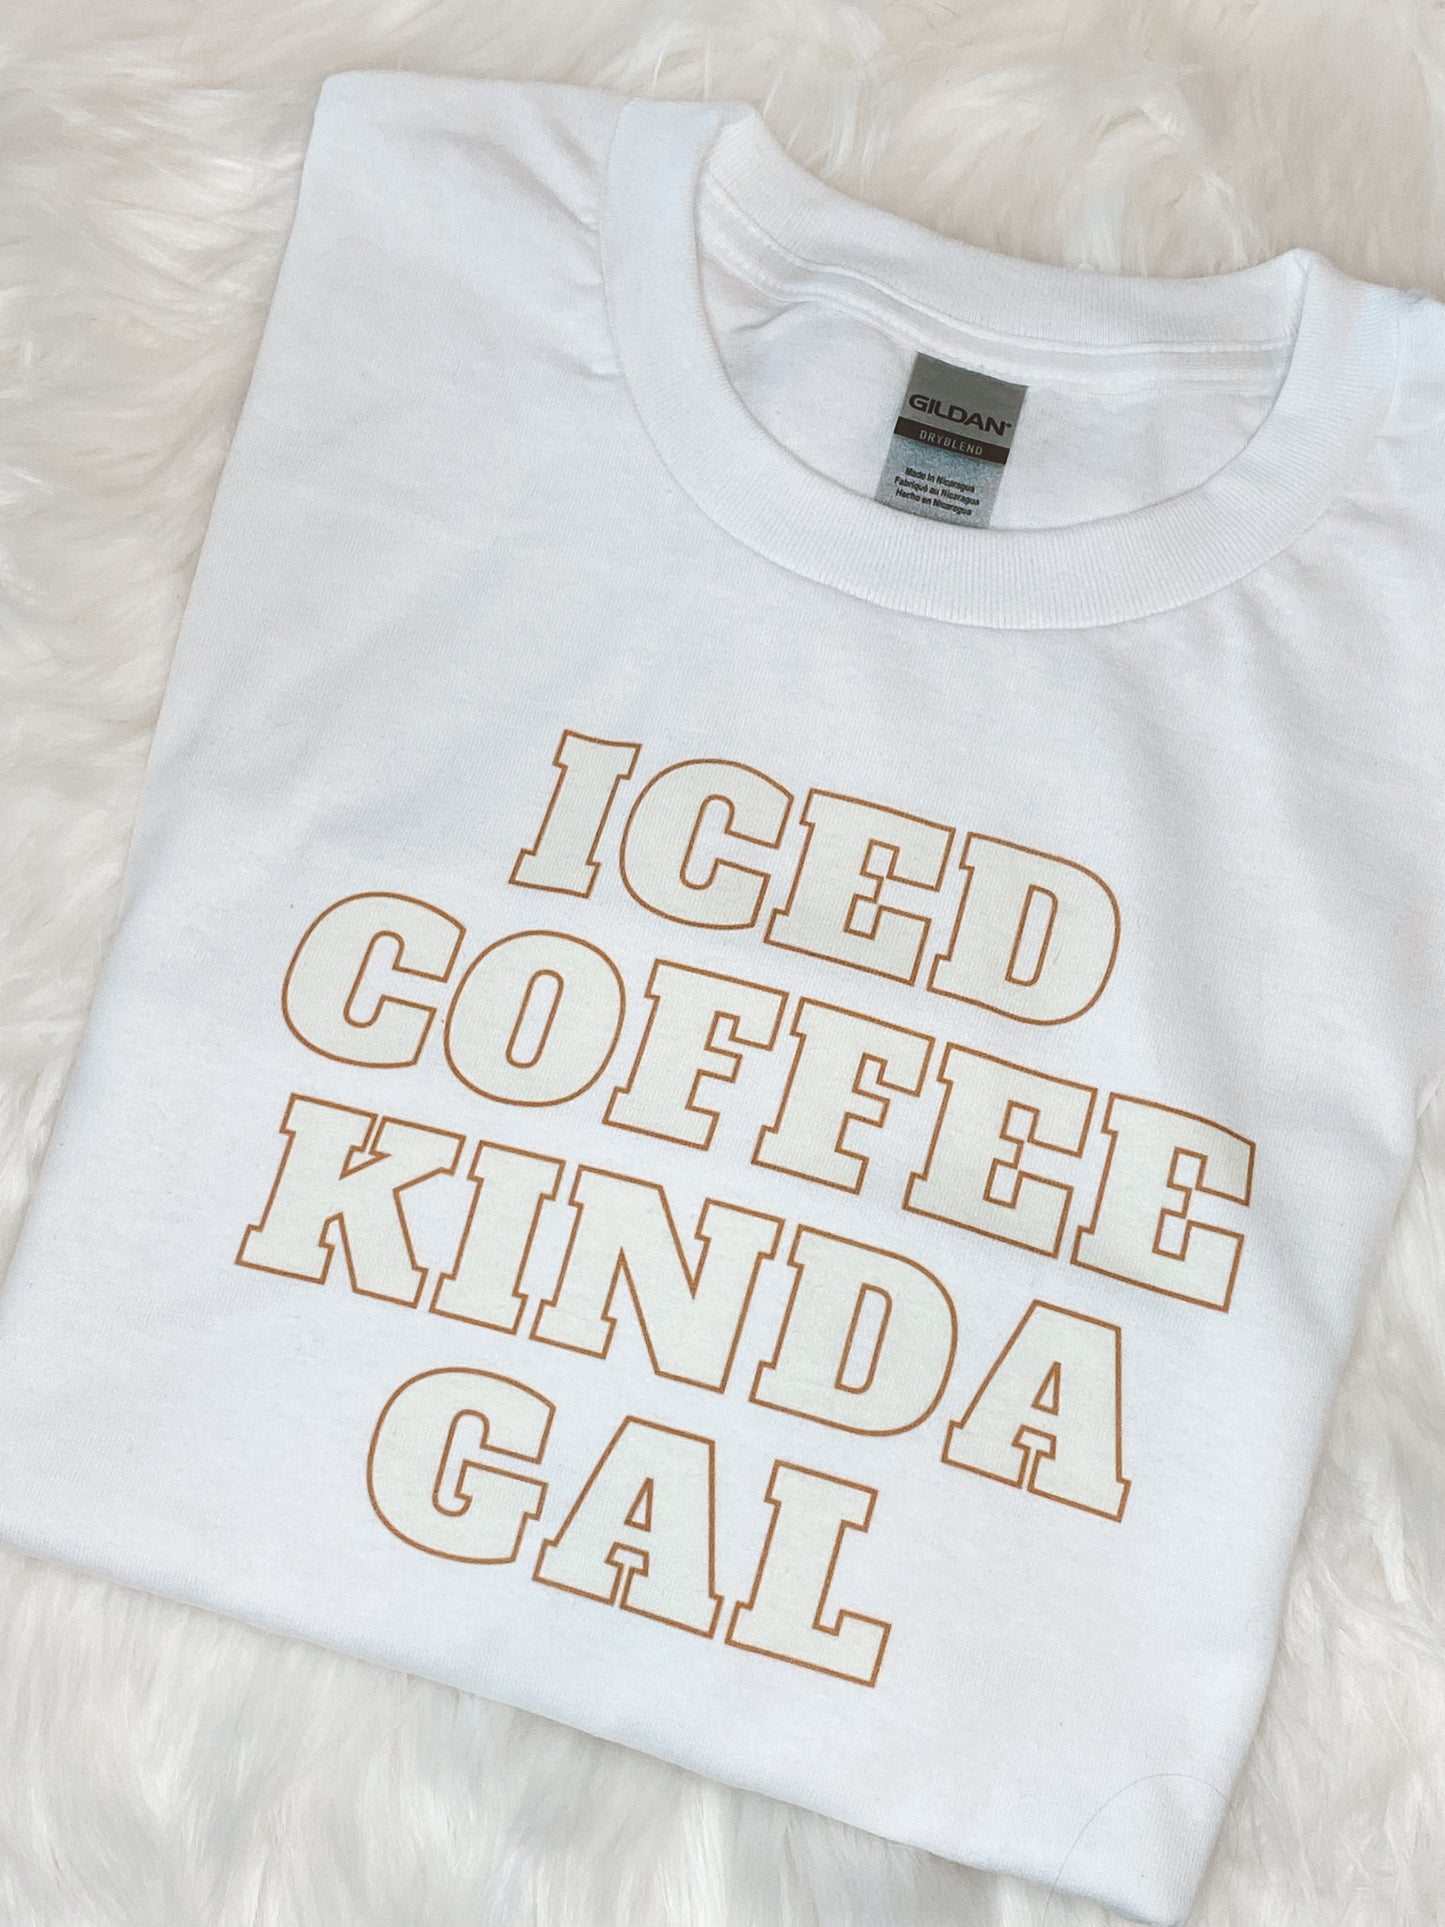 Iced Coffee kinda gal